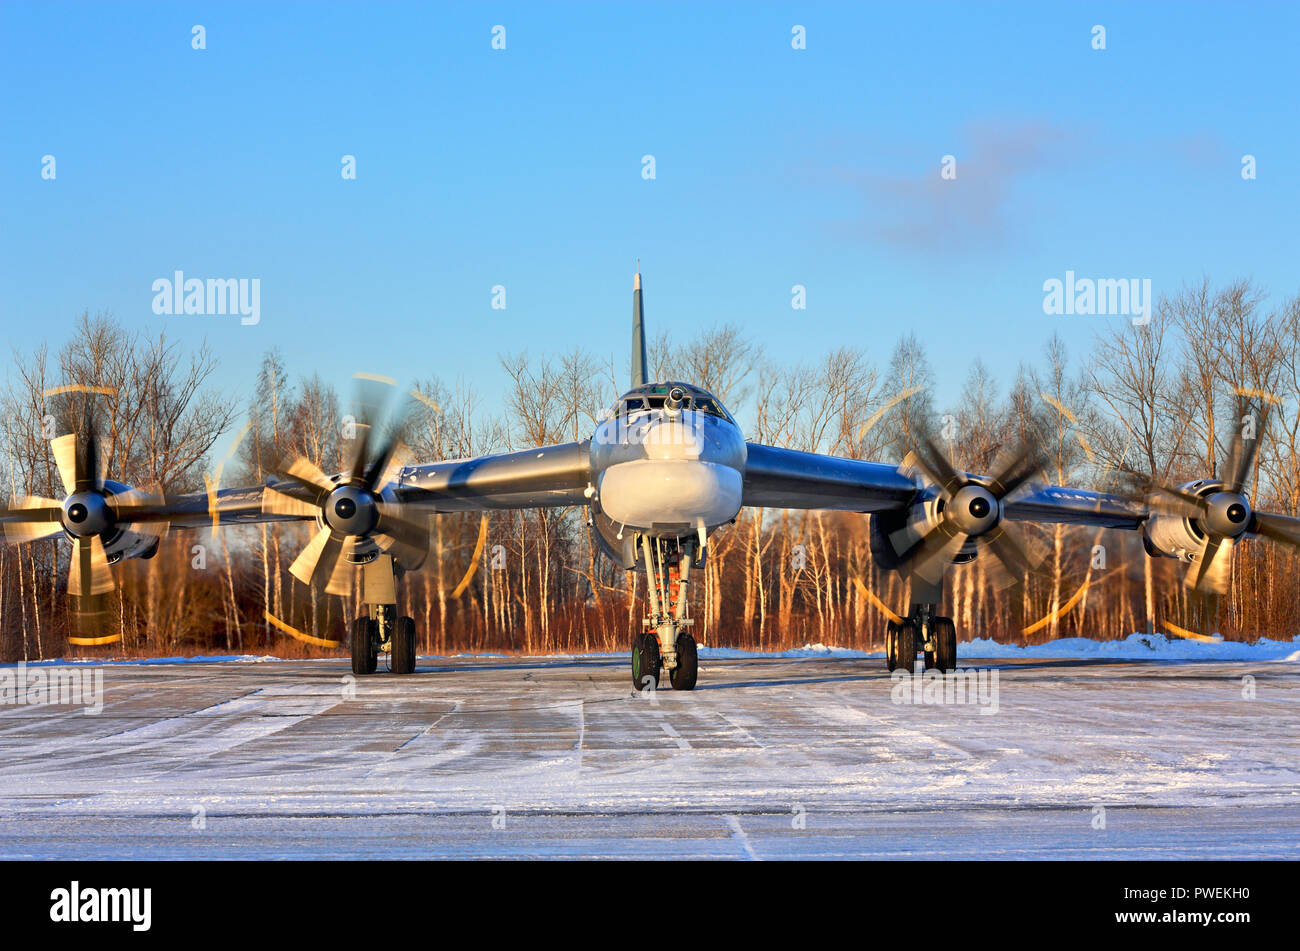 Russian long-range strategic bomber Tu-95 “Bear” parked at the air base Stock Photo